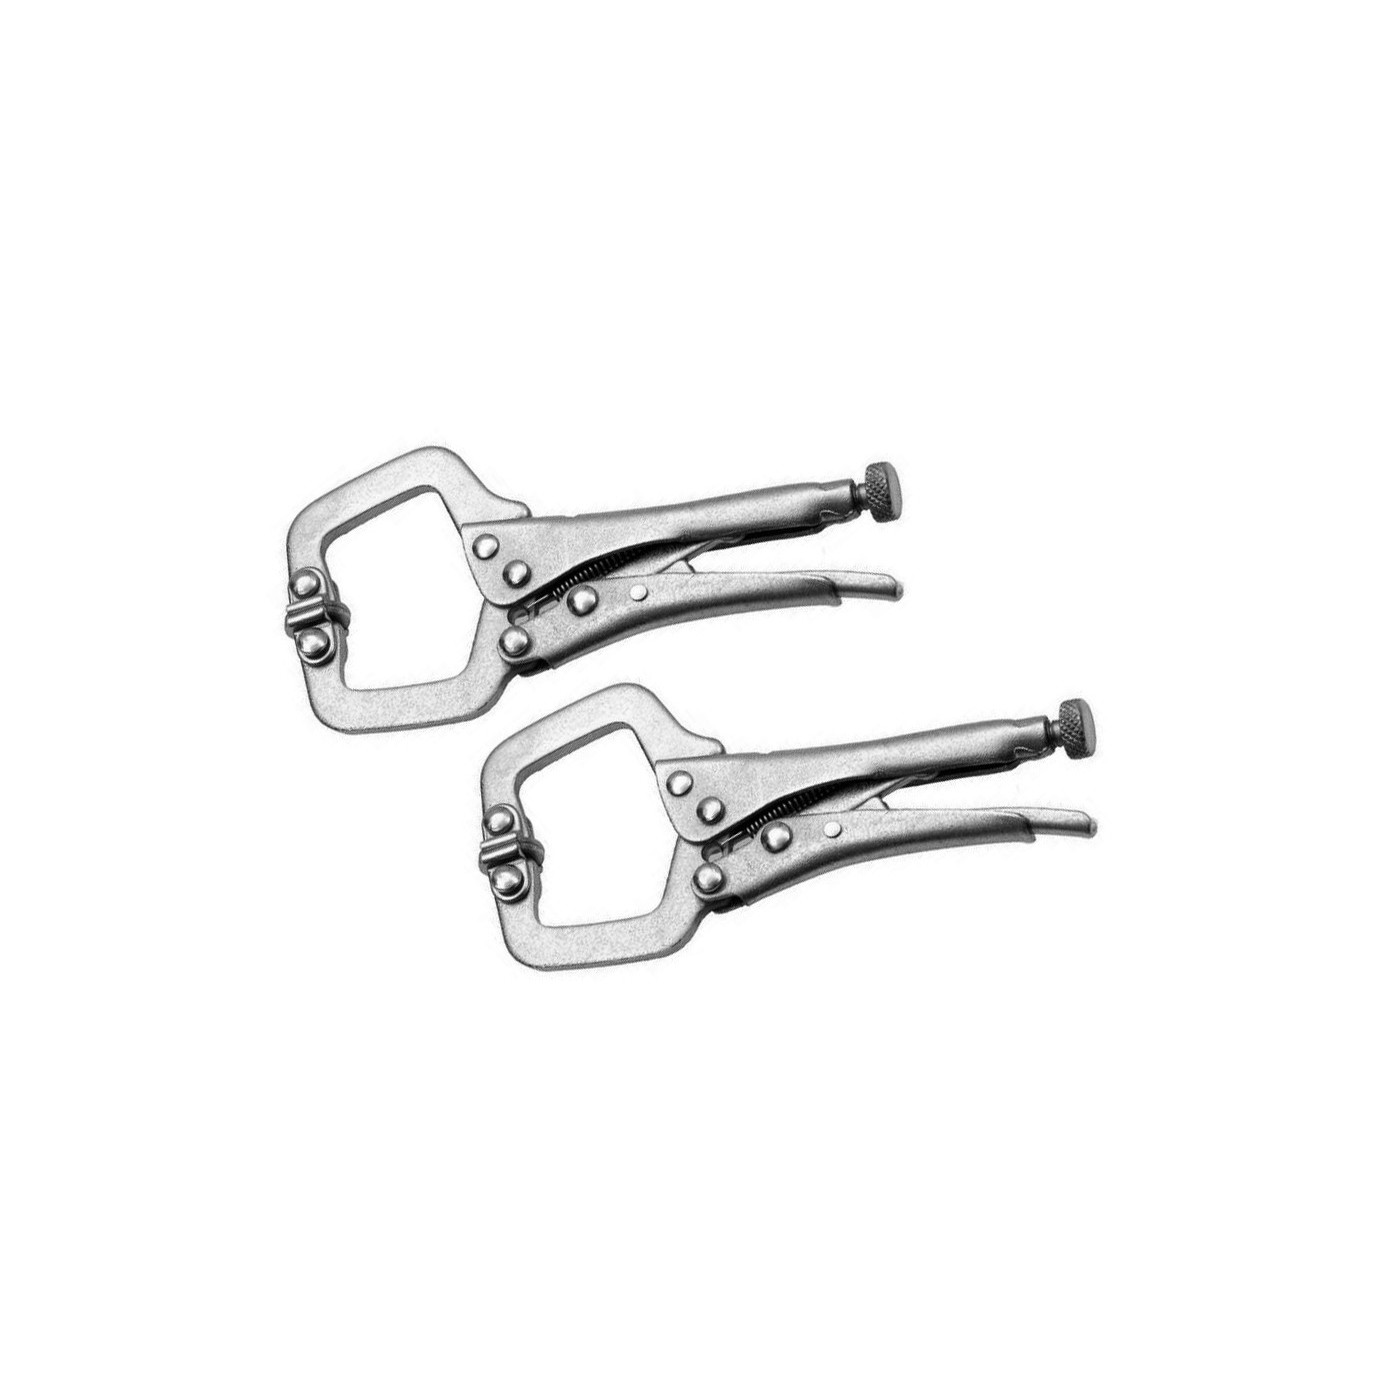 Set of 2 locking pliers (125 mm)